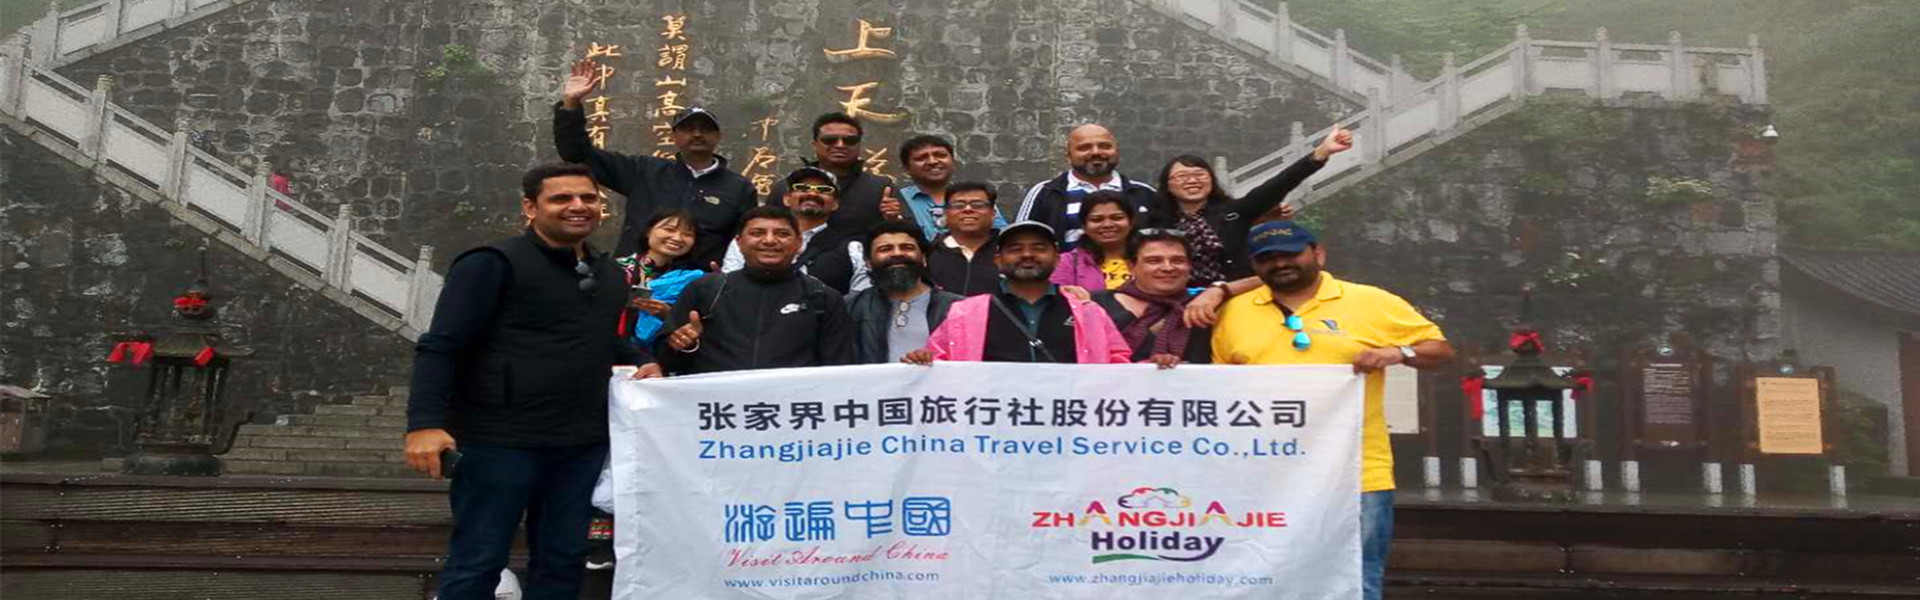 6 Days Zhangjiajie tour from Mubai or Delhi,India